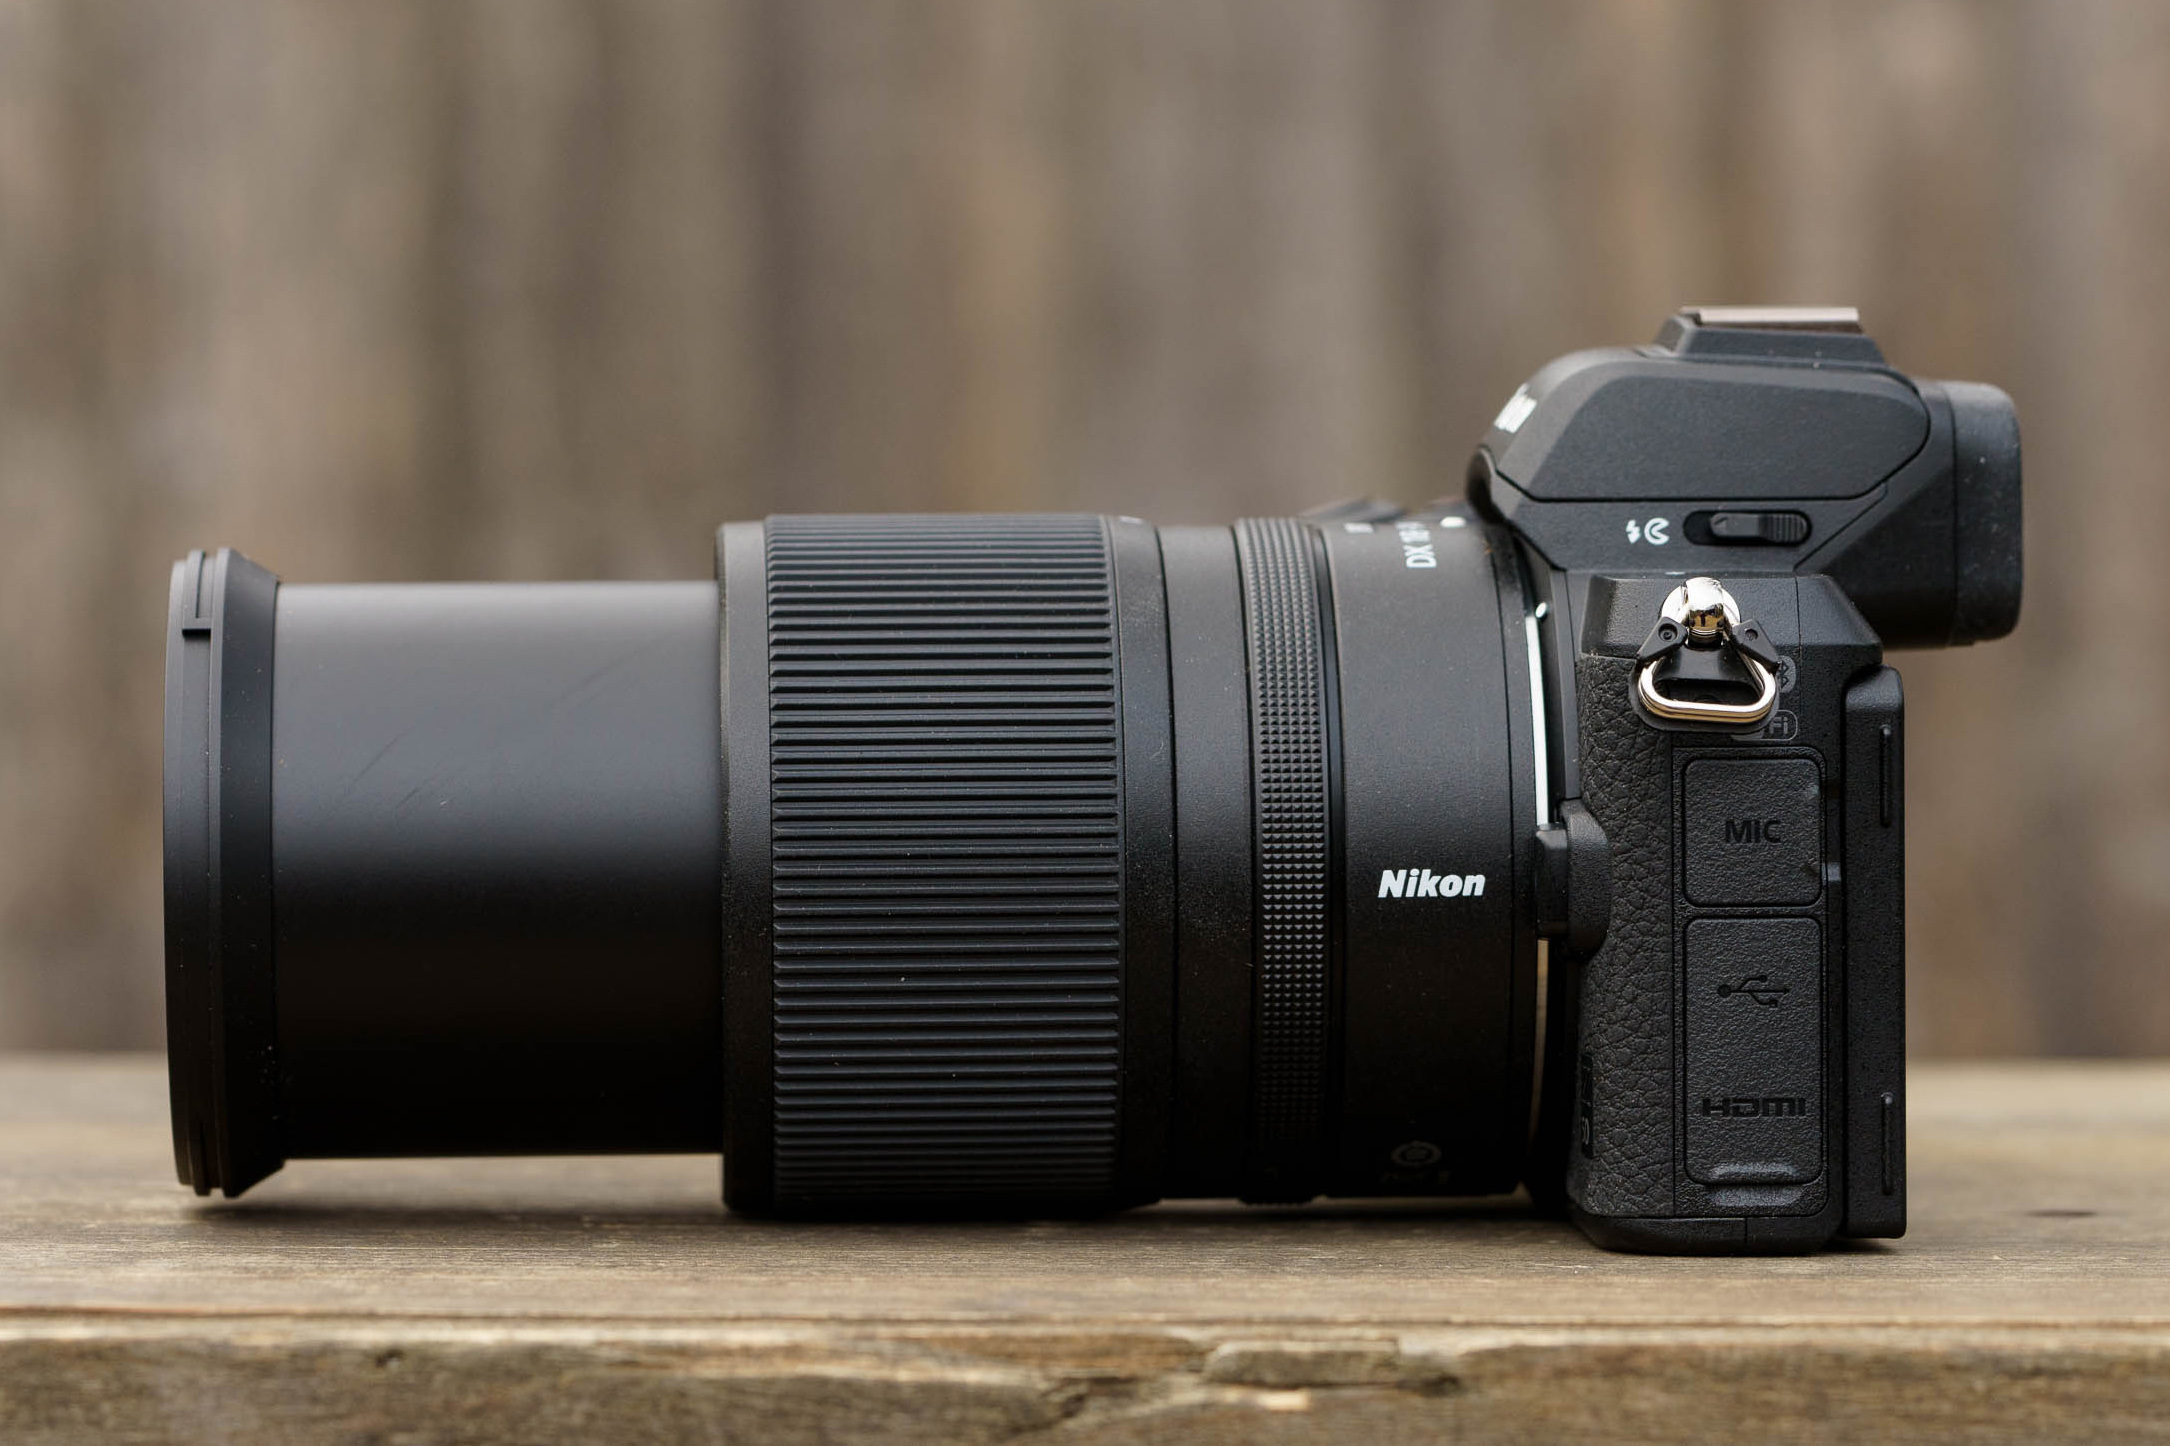 Nikon Nikkor Z DX 18-140mm f3.5-6.3 VR lens extended on Nikon Z